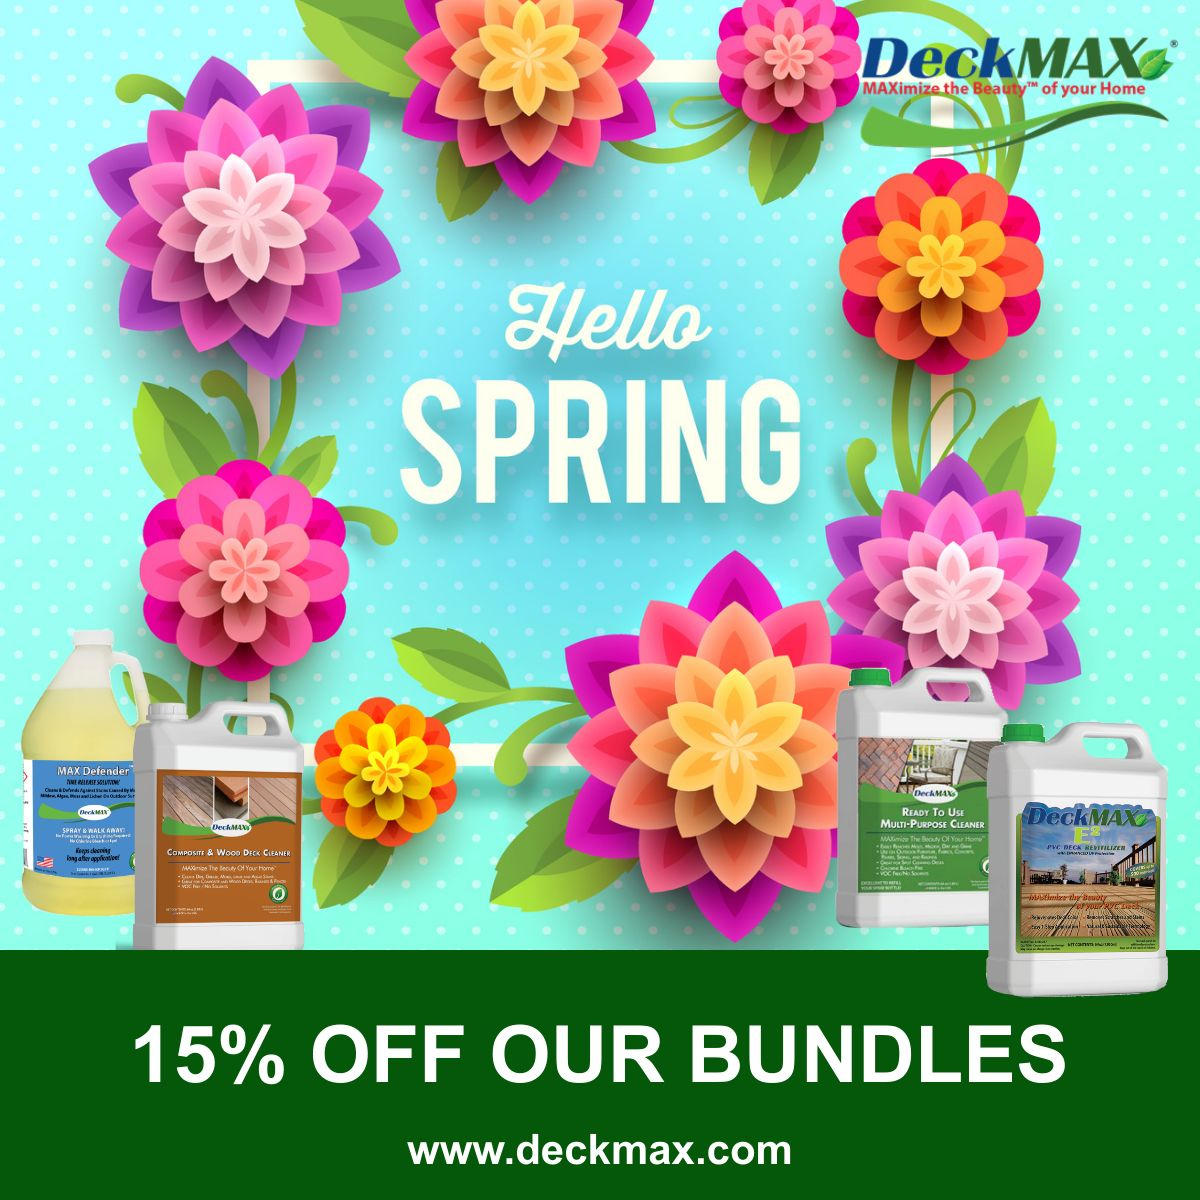 deckmax bundle spring sale